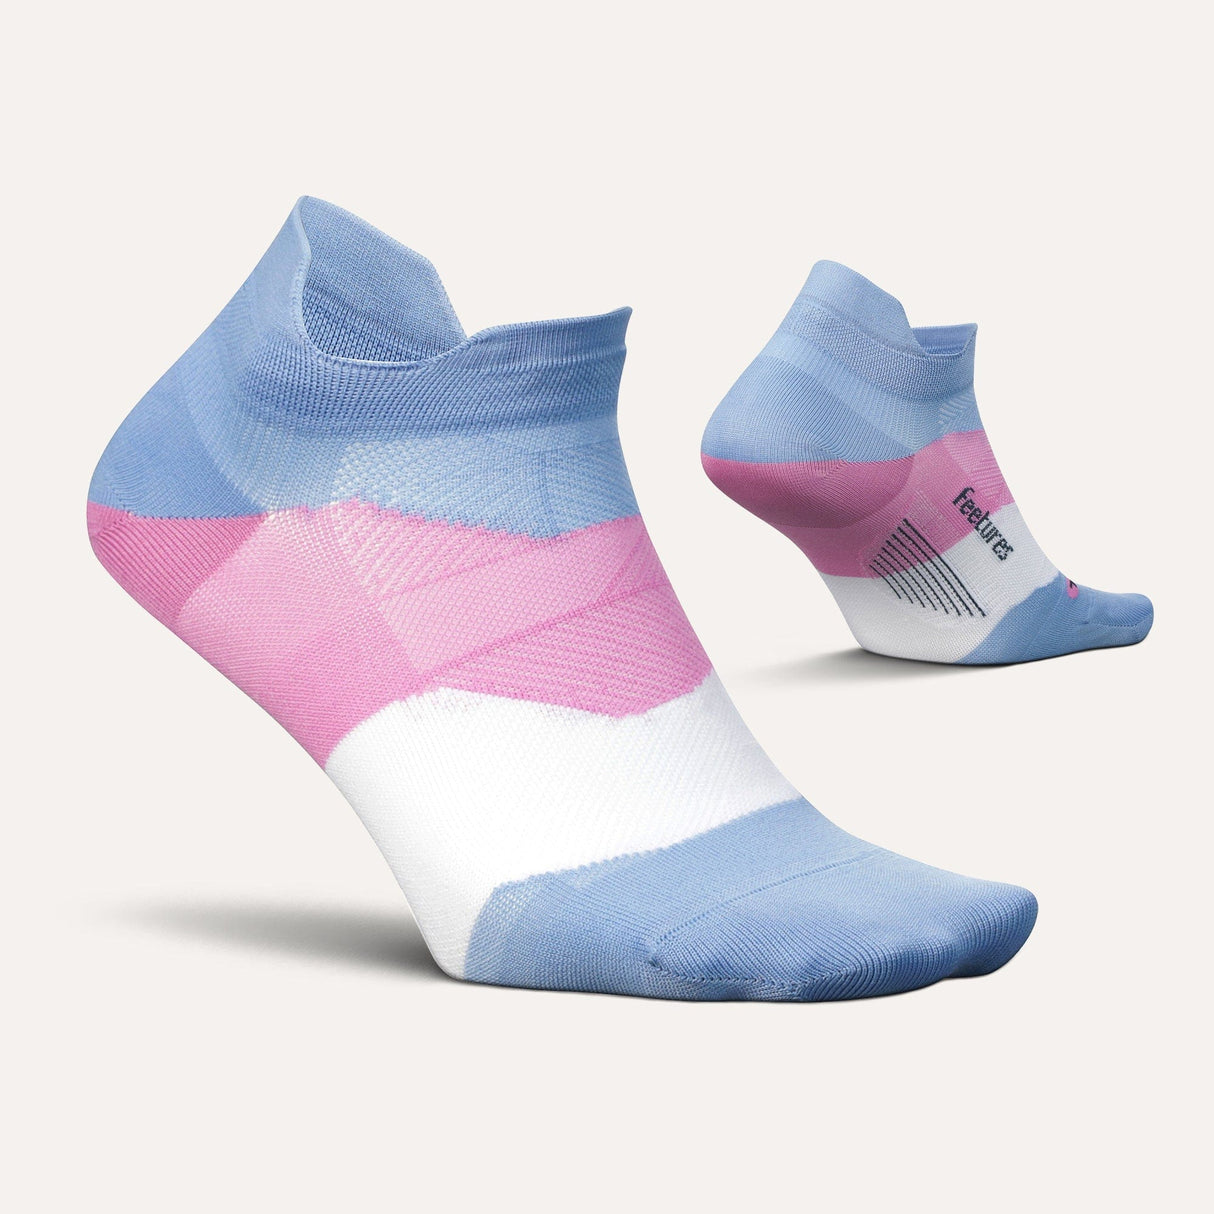 Feetures Elite Ultra Light No Show Tab Socks  - 